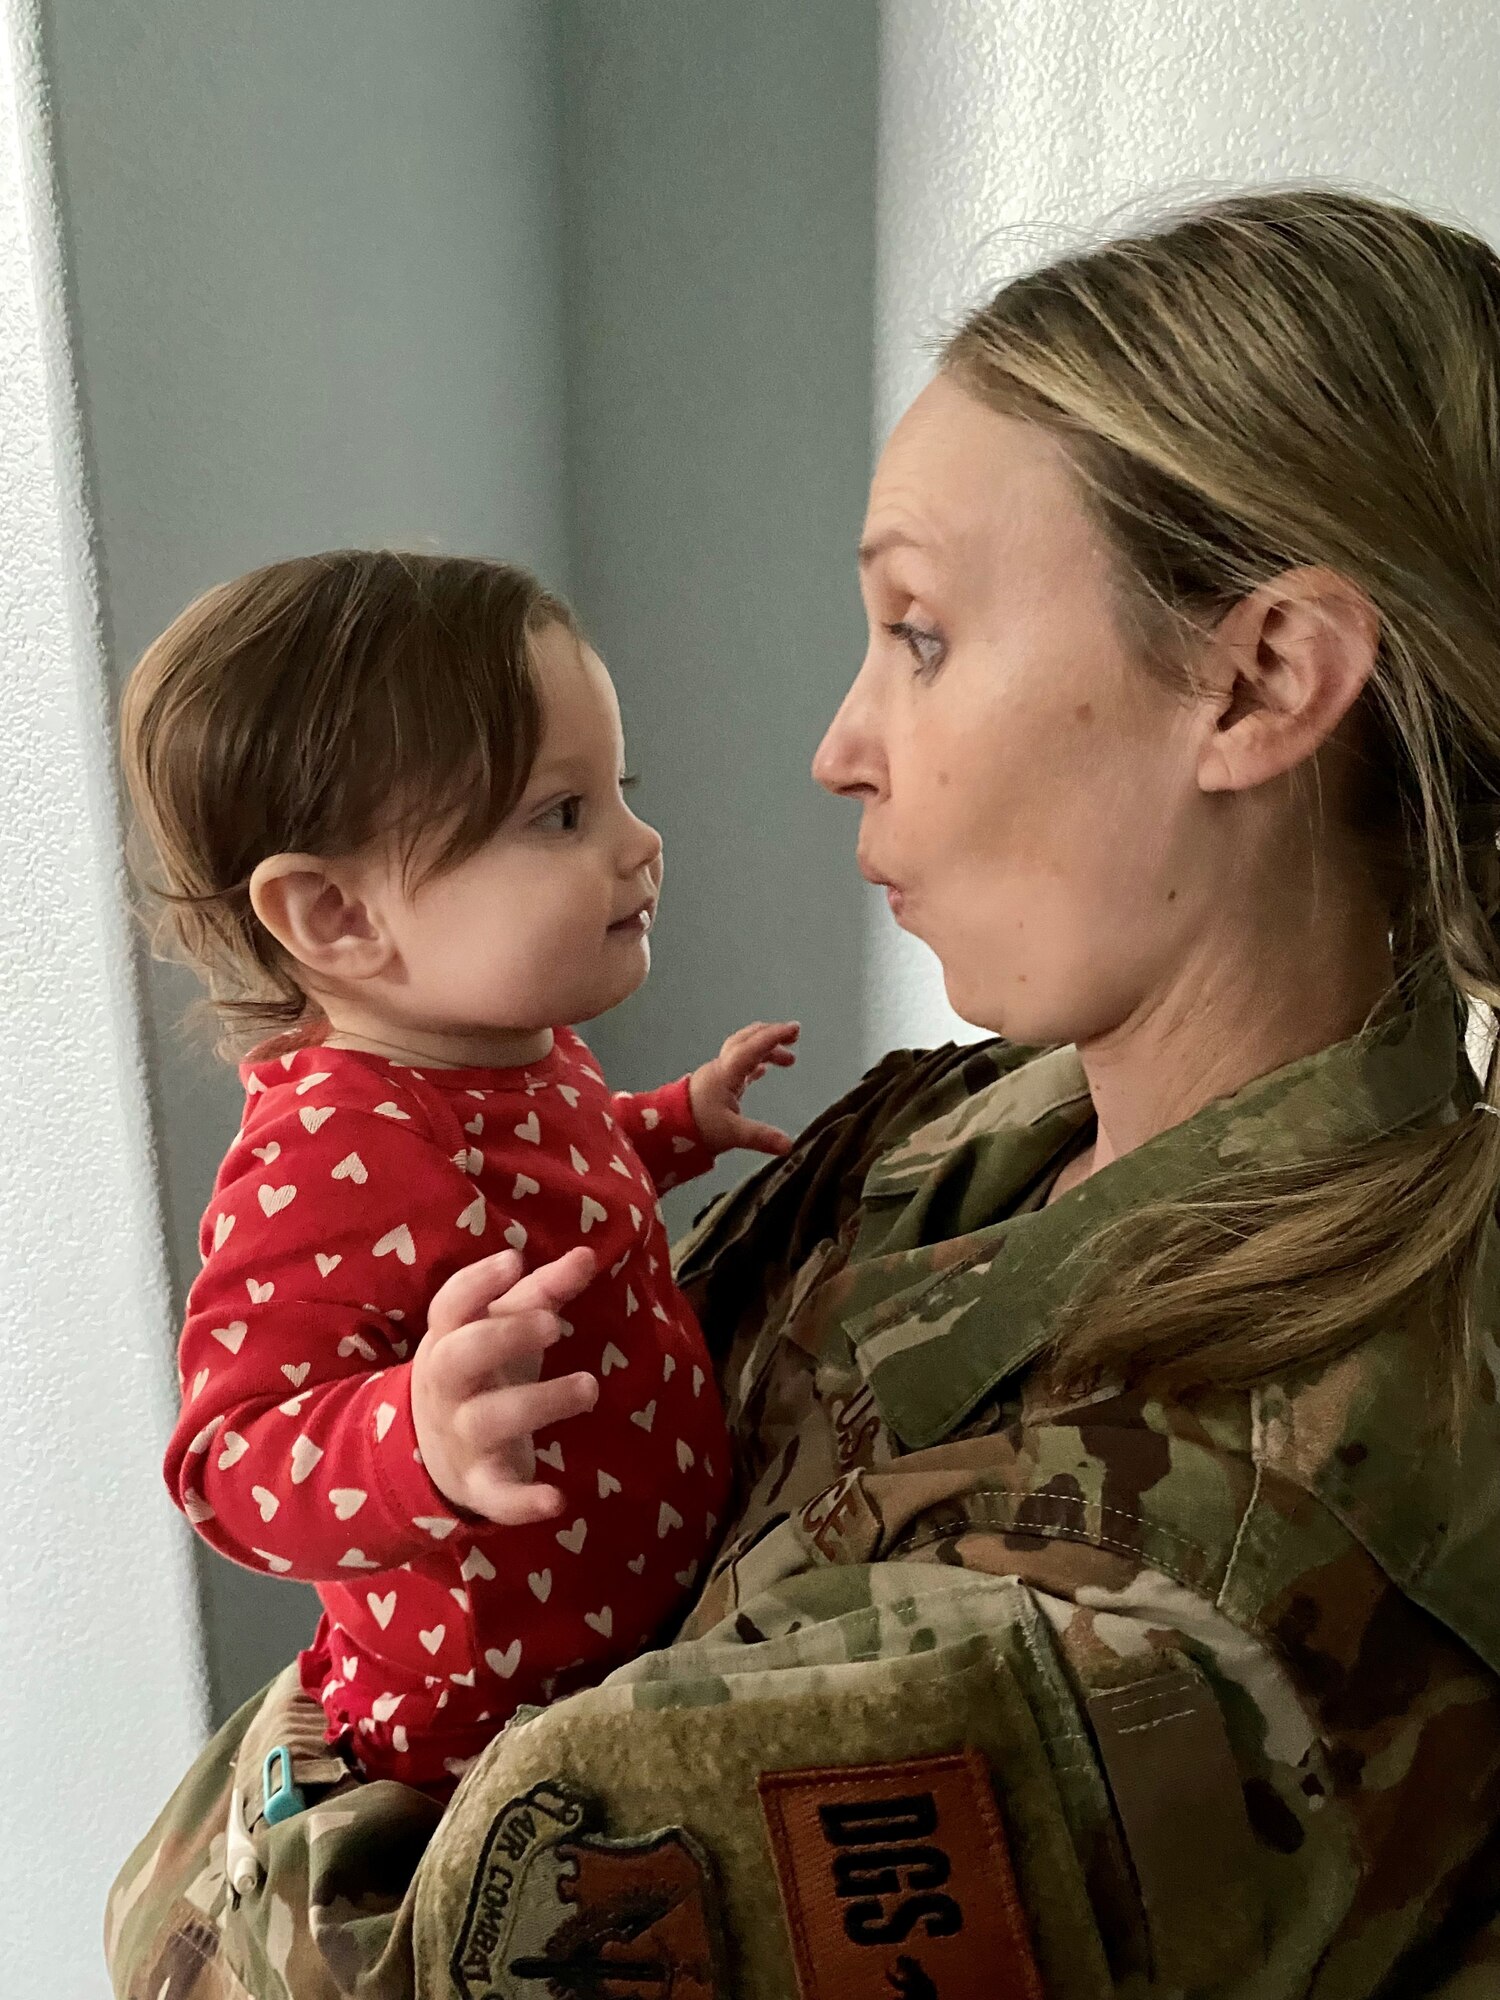 U.S. Air Force Lt. Col. Sarah Avila, M.D., holds her daughter, Feb. 16, 2022 in Roseville, California.